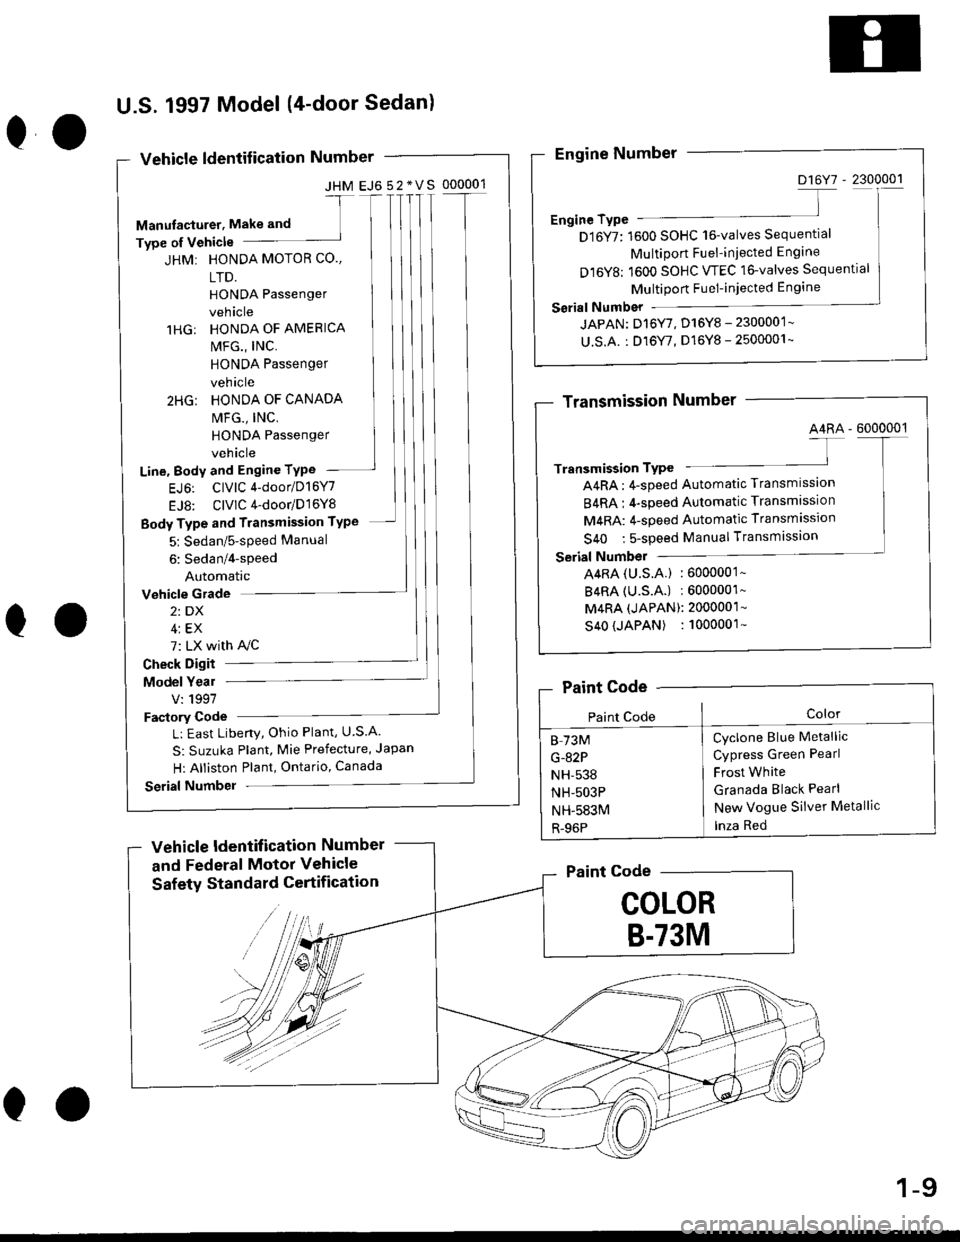 HONDA CIVIC 1999 6.G User Guide 00
U.S. 1997 Model (4-door Sedanl
Vehicle ldentif ication Number
JHM EJ6 52*VS 000001
Manulaqturer. Make and 
-t
Type of Vehicle
HONDA MOTOR CO.,
LTD.
HONDA Passenger
vehicle
HONDA OF AMERICA
MFG., IN